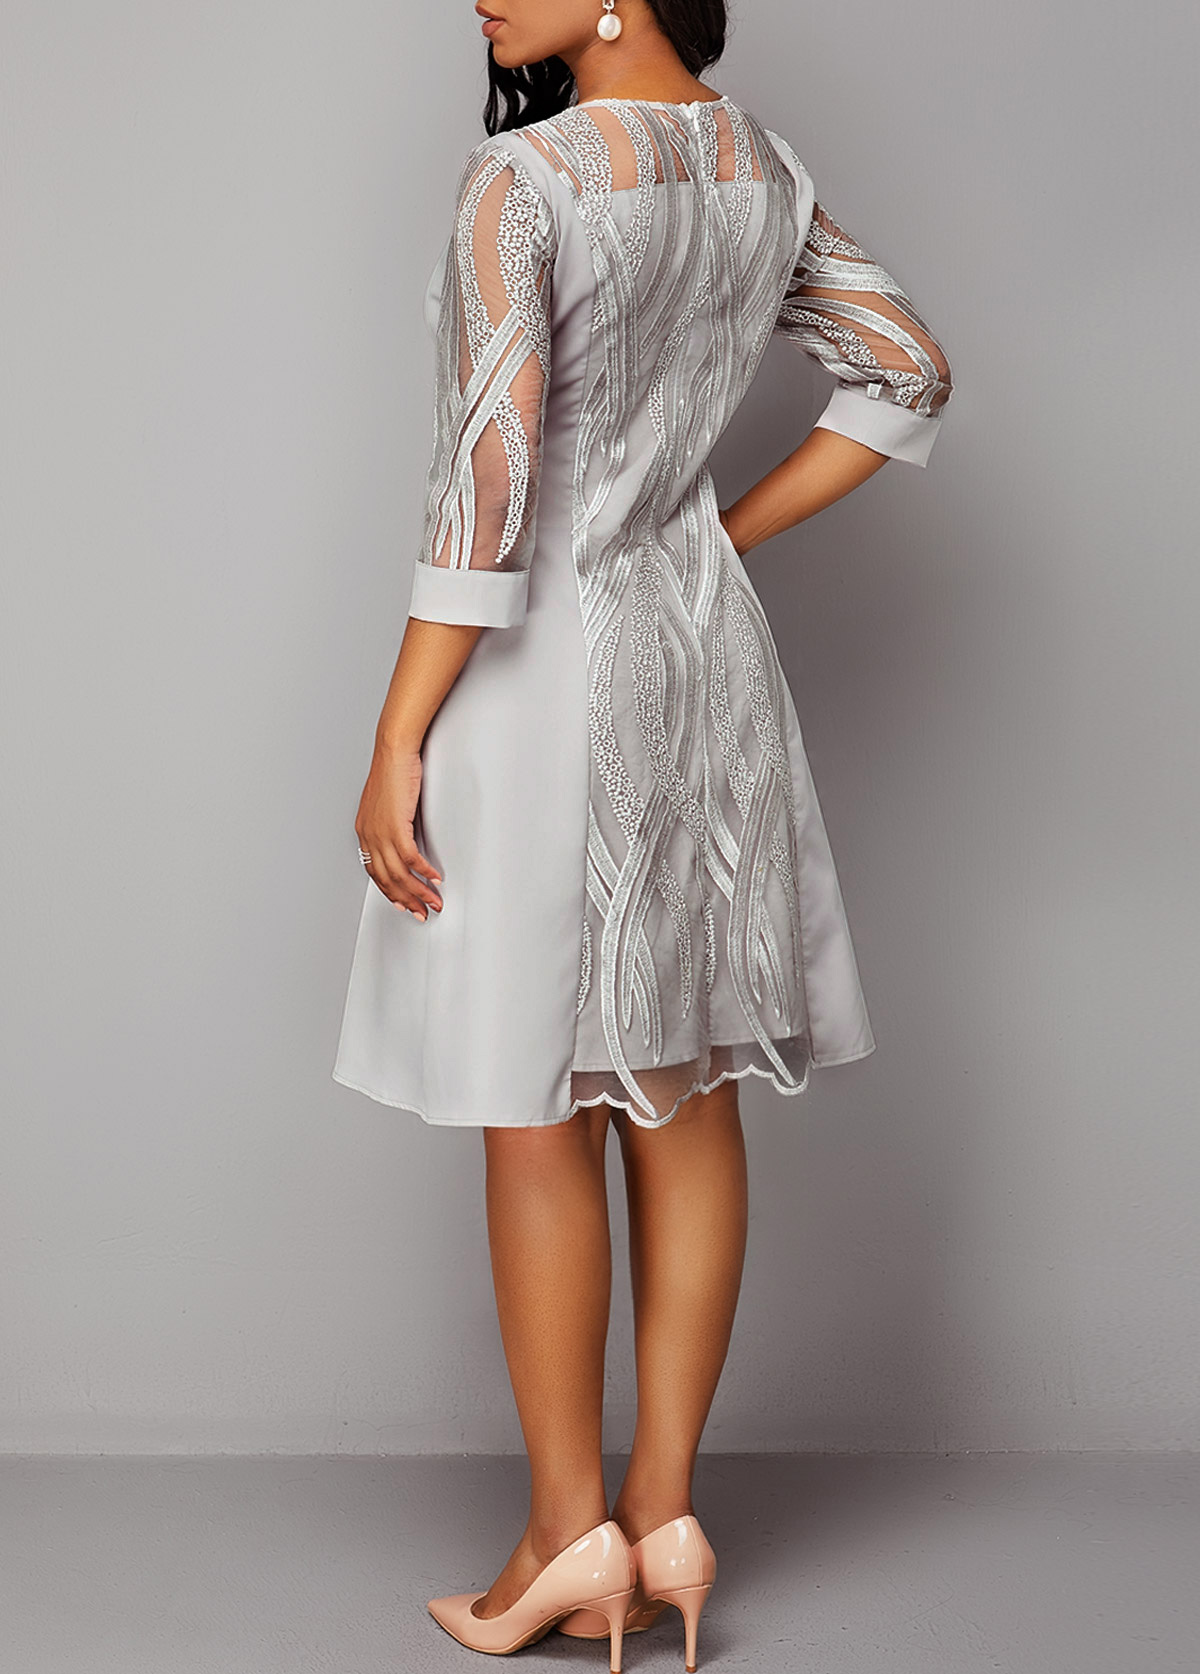 Lace Panel 3/4 Sleeve Light Grey Dress